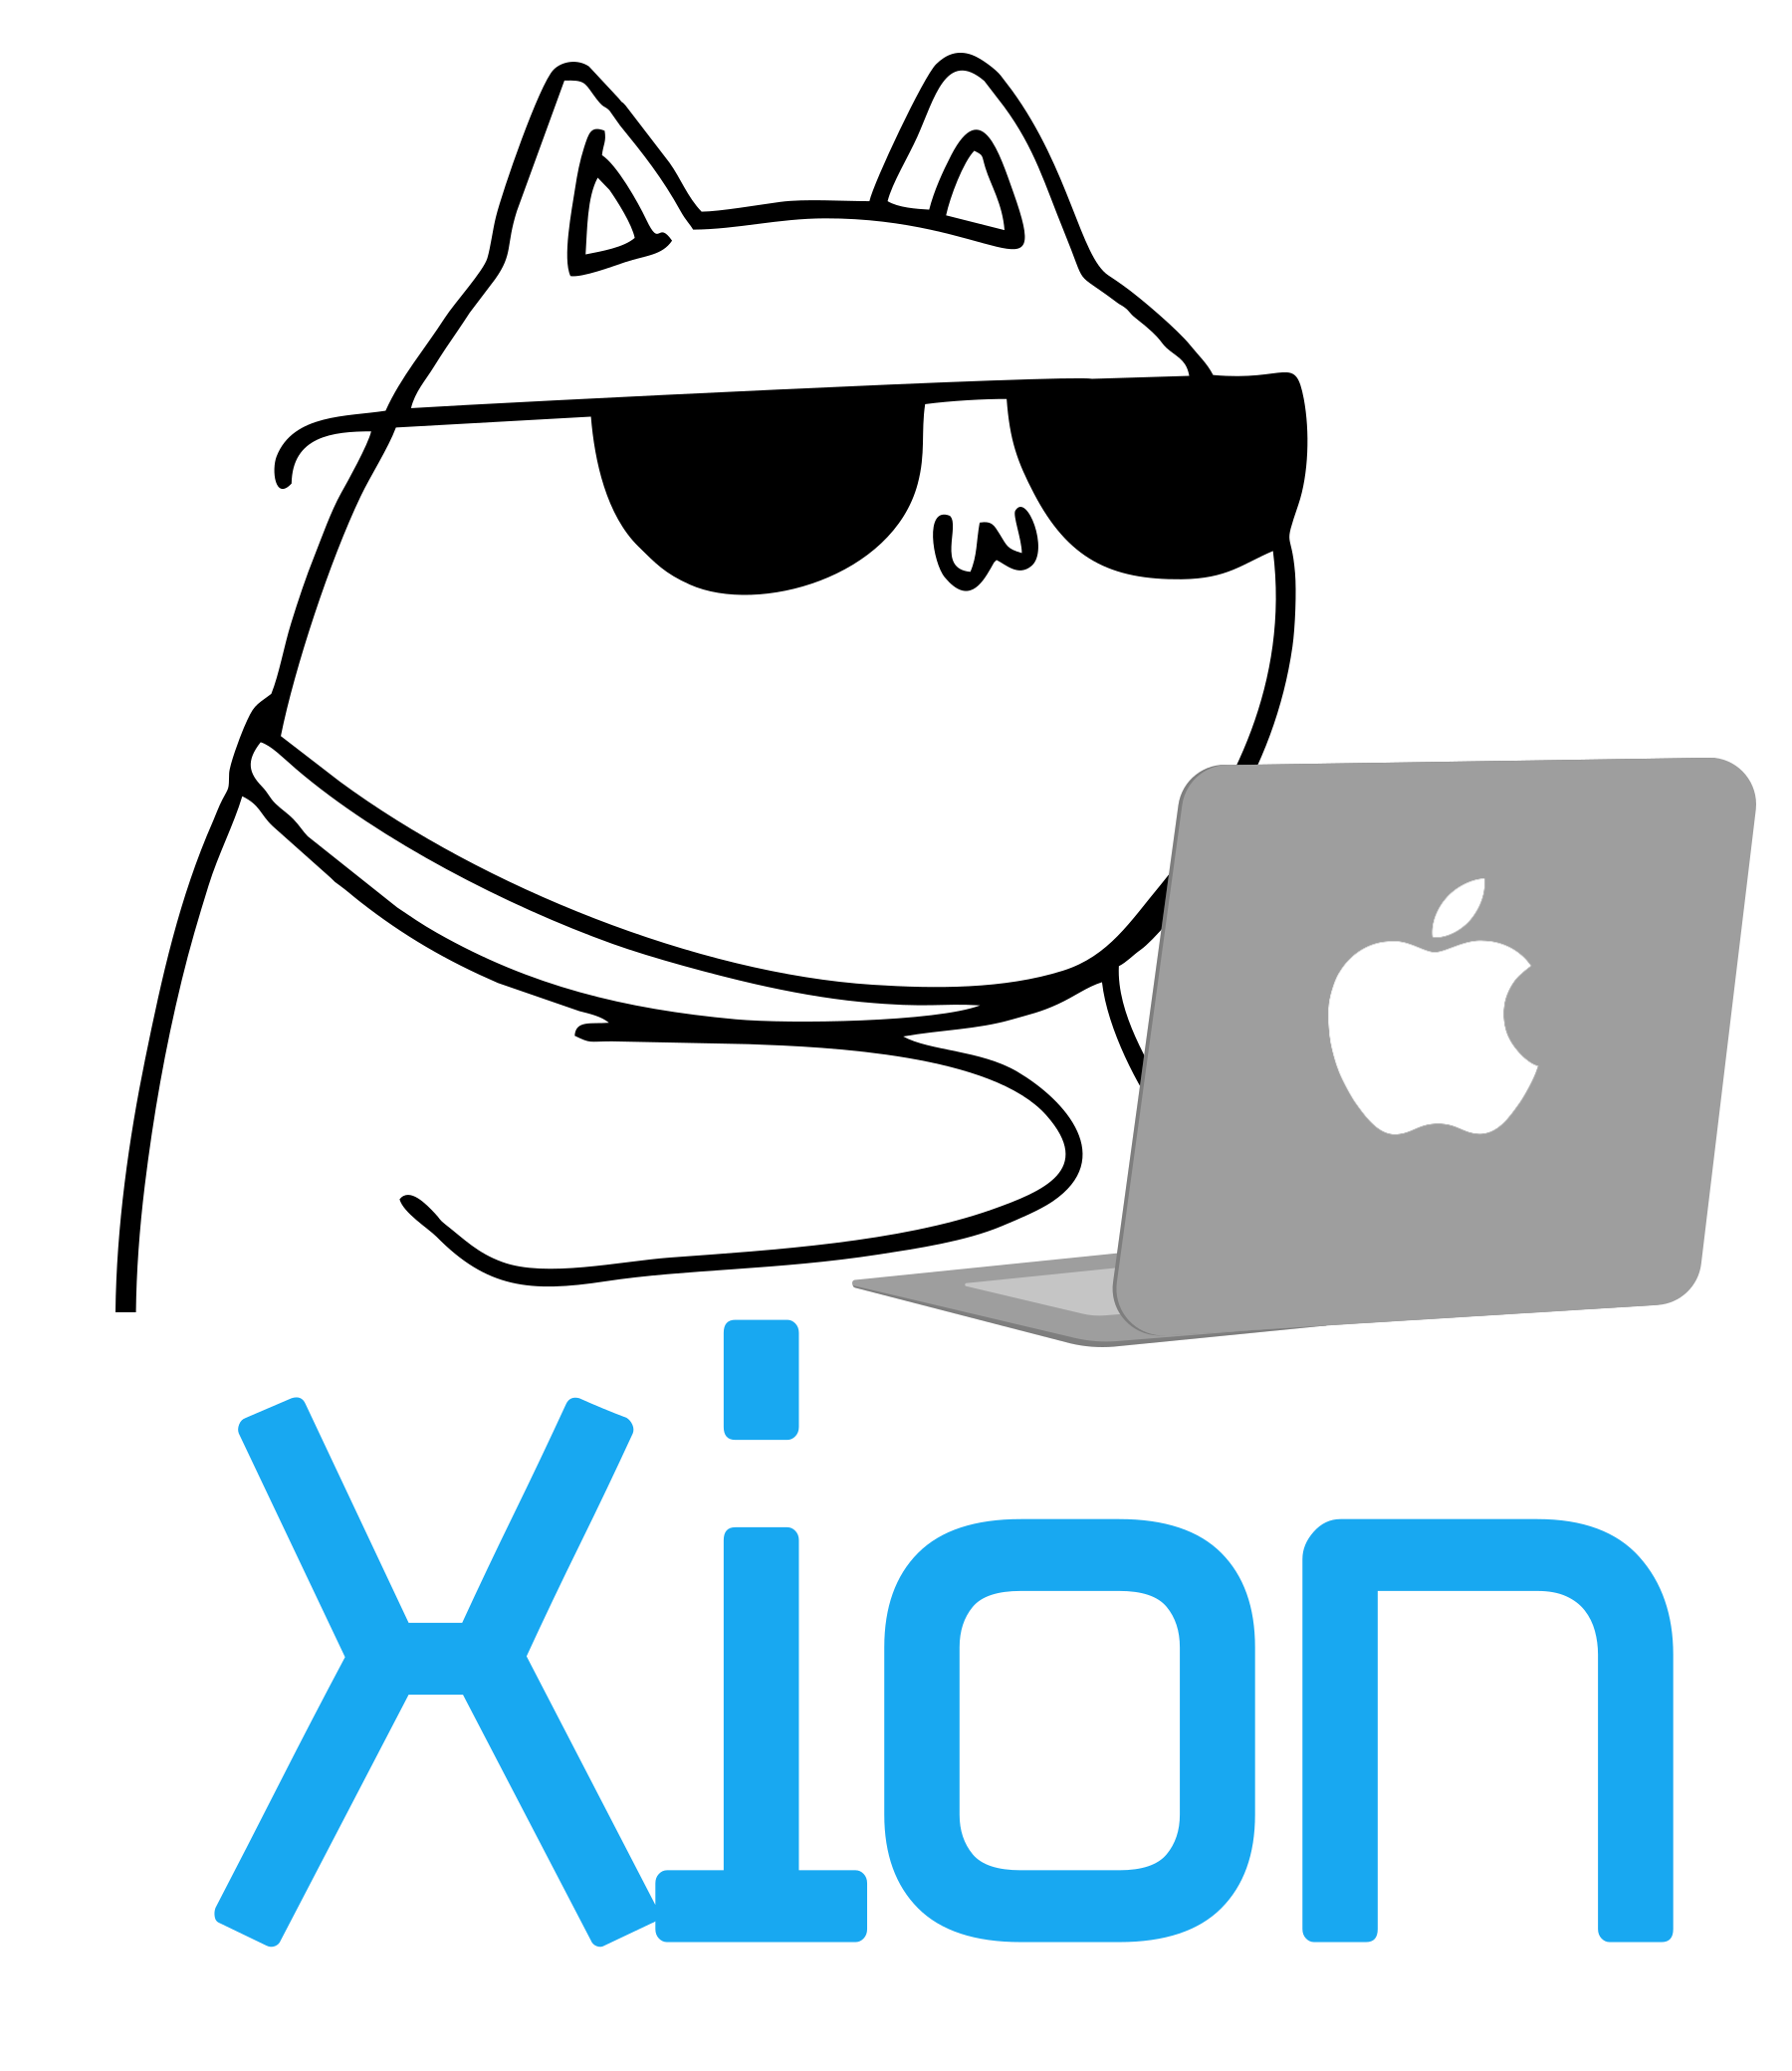 Xion 로고 이미지